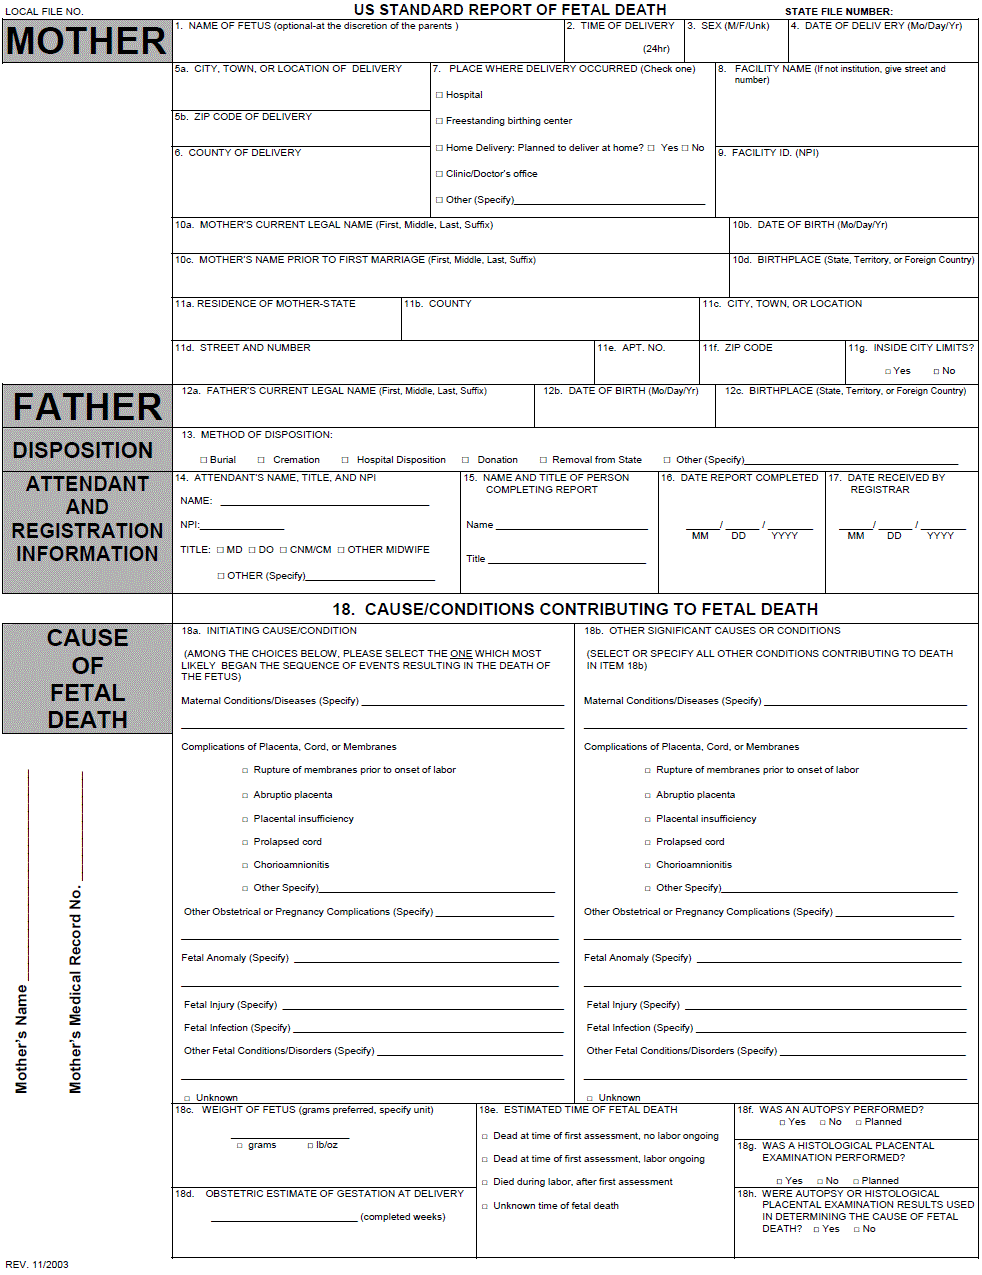 Image of US standard fetal death certificate